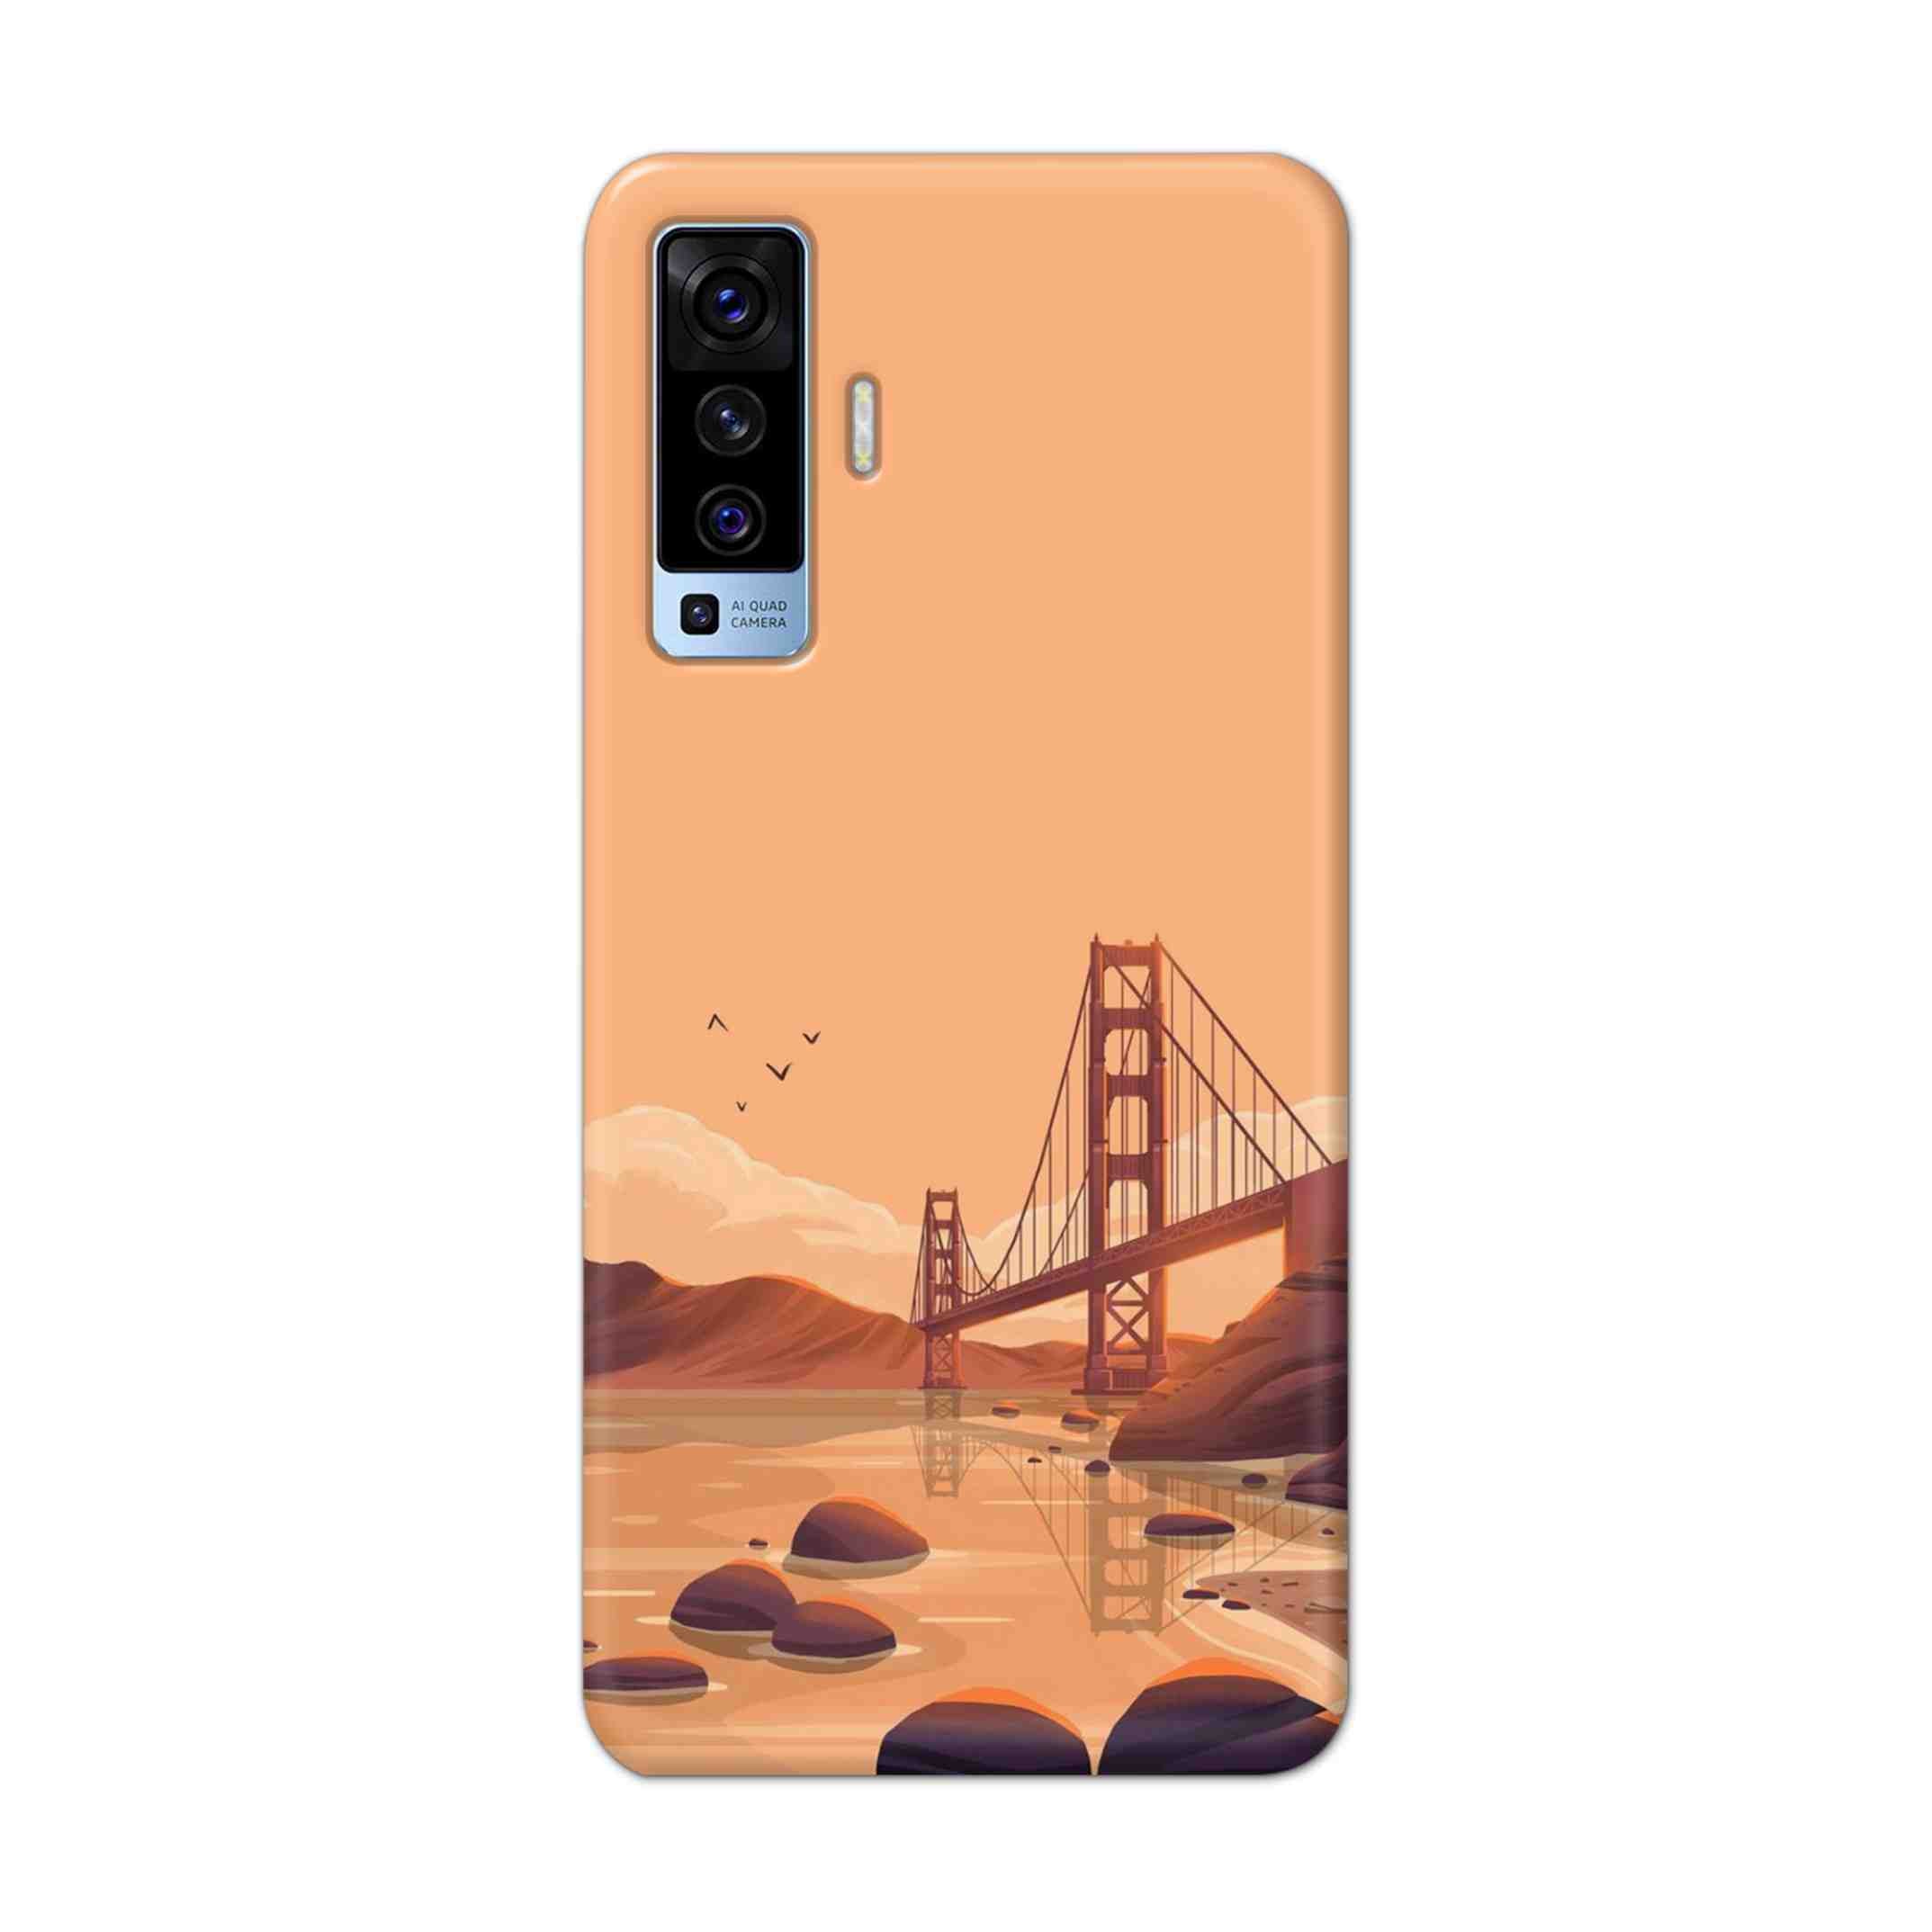 Buy San Francisco Hard Back Mobile Phone Case Cover For Vivo X50 Online